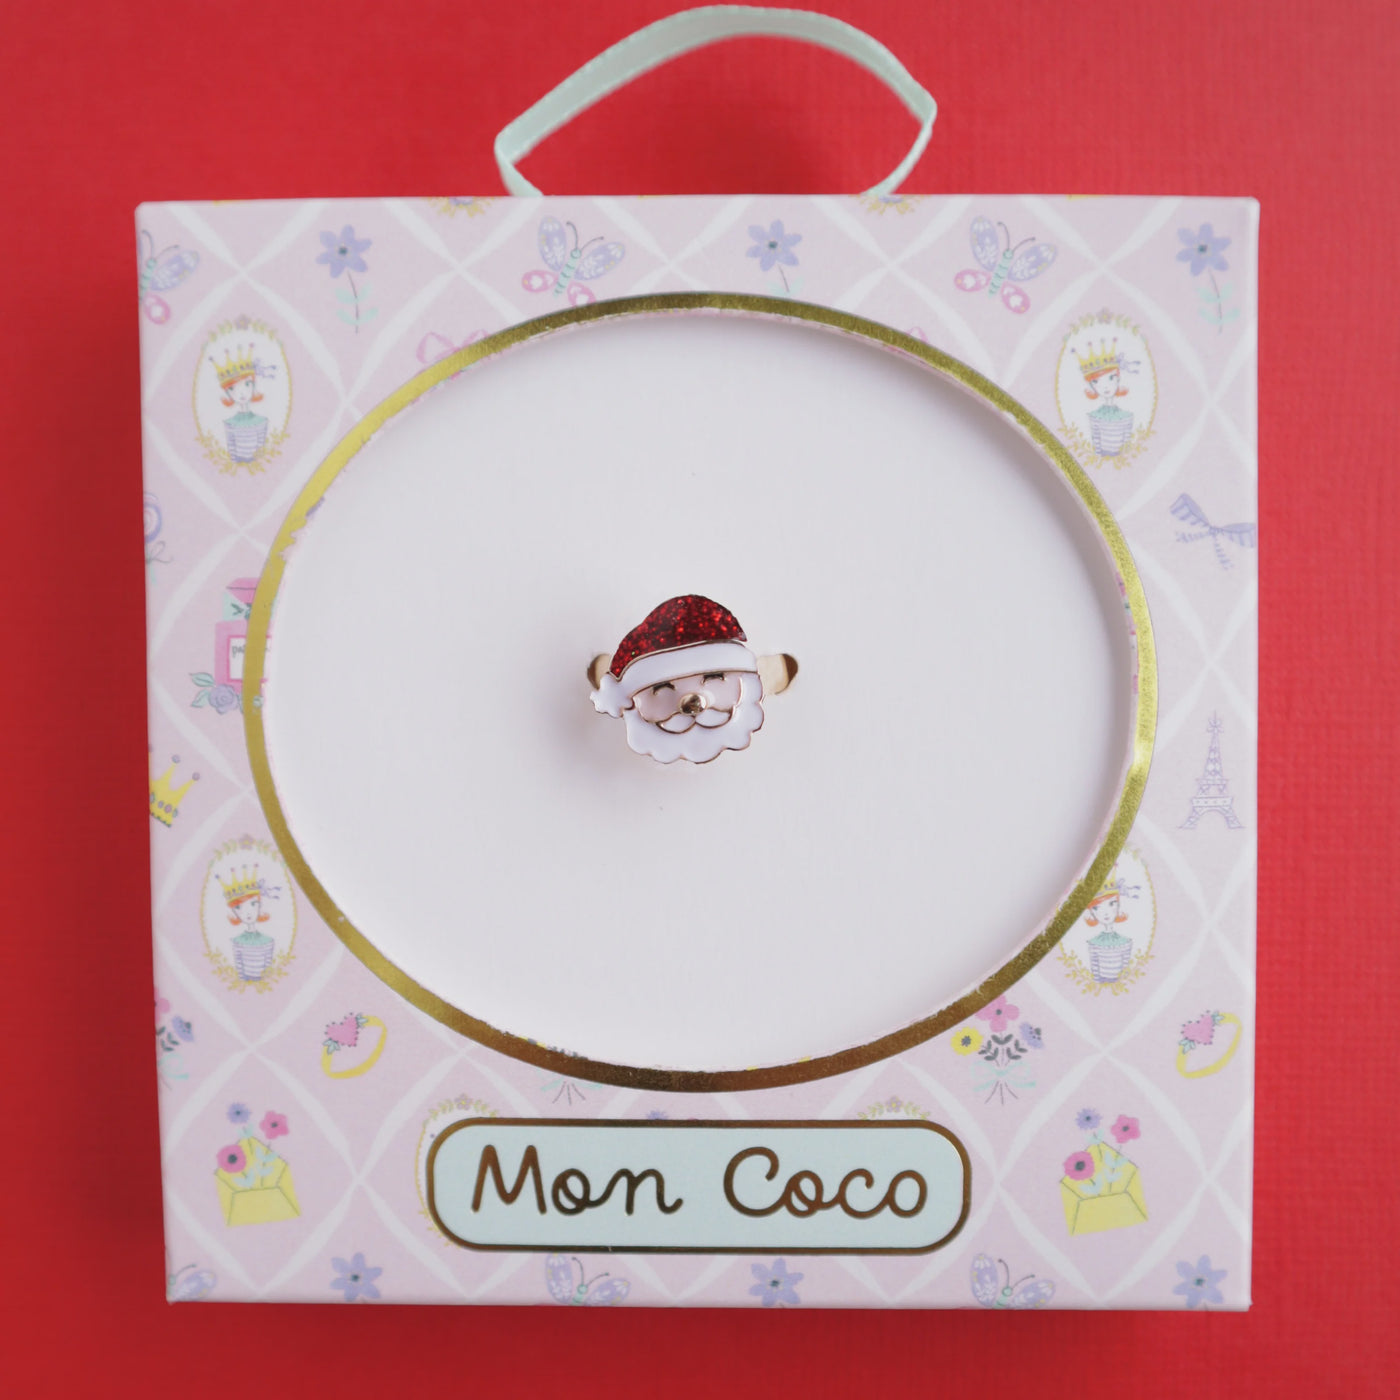 Mon Coco Dear Santa ring